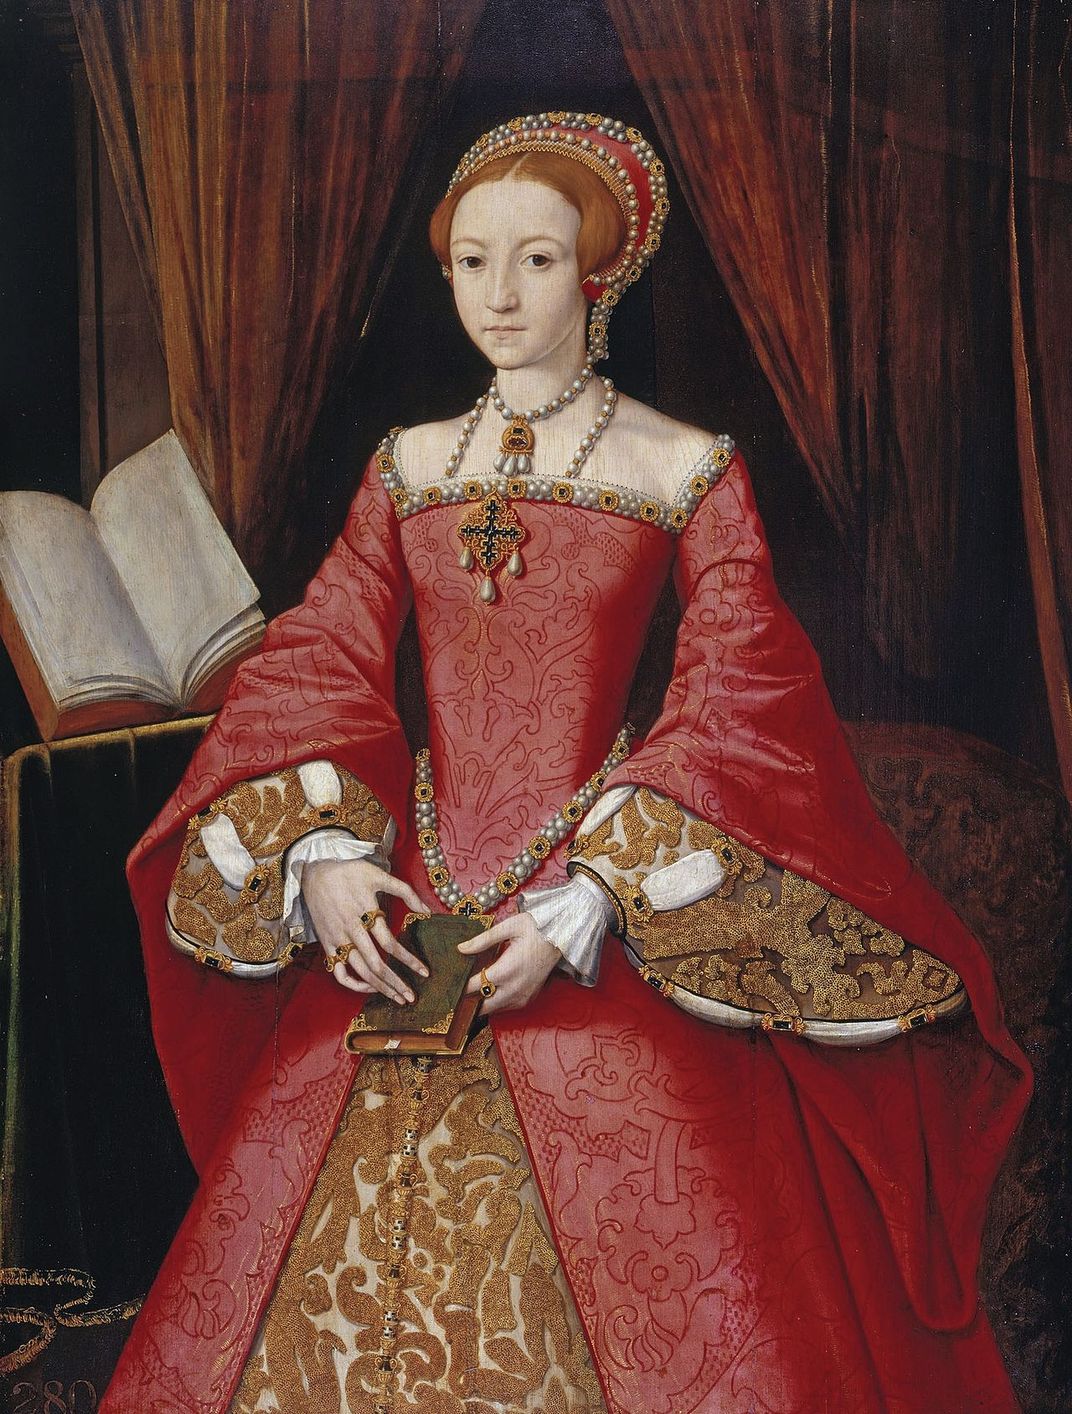 A young Elizabeth Tudor, painted around 1546